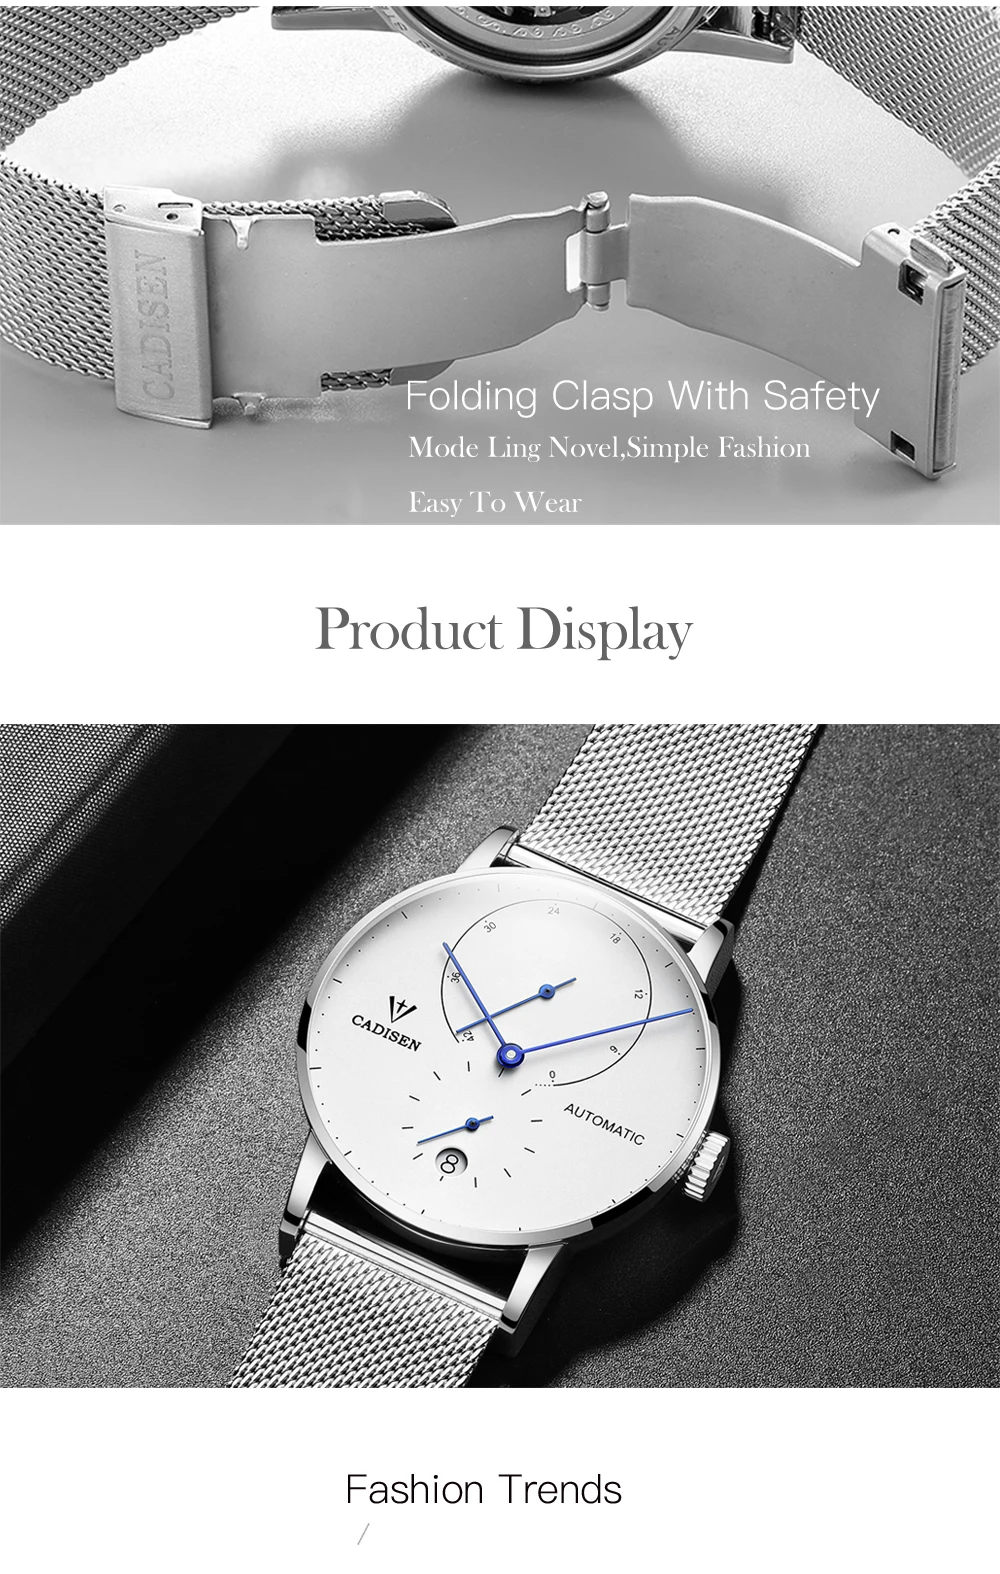 Mens Watches CADISEN 2019 Top Luxury Brand Automatic Mechanical Watch Men Full Steel Business Waterproof Fashion Sport Watches